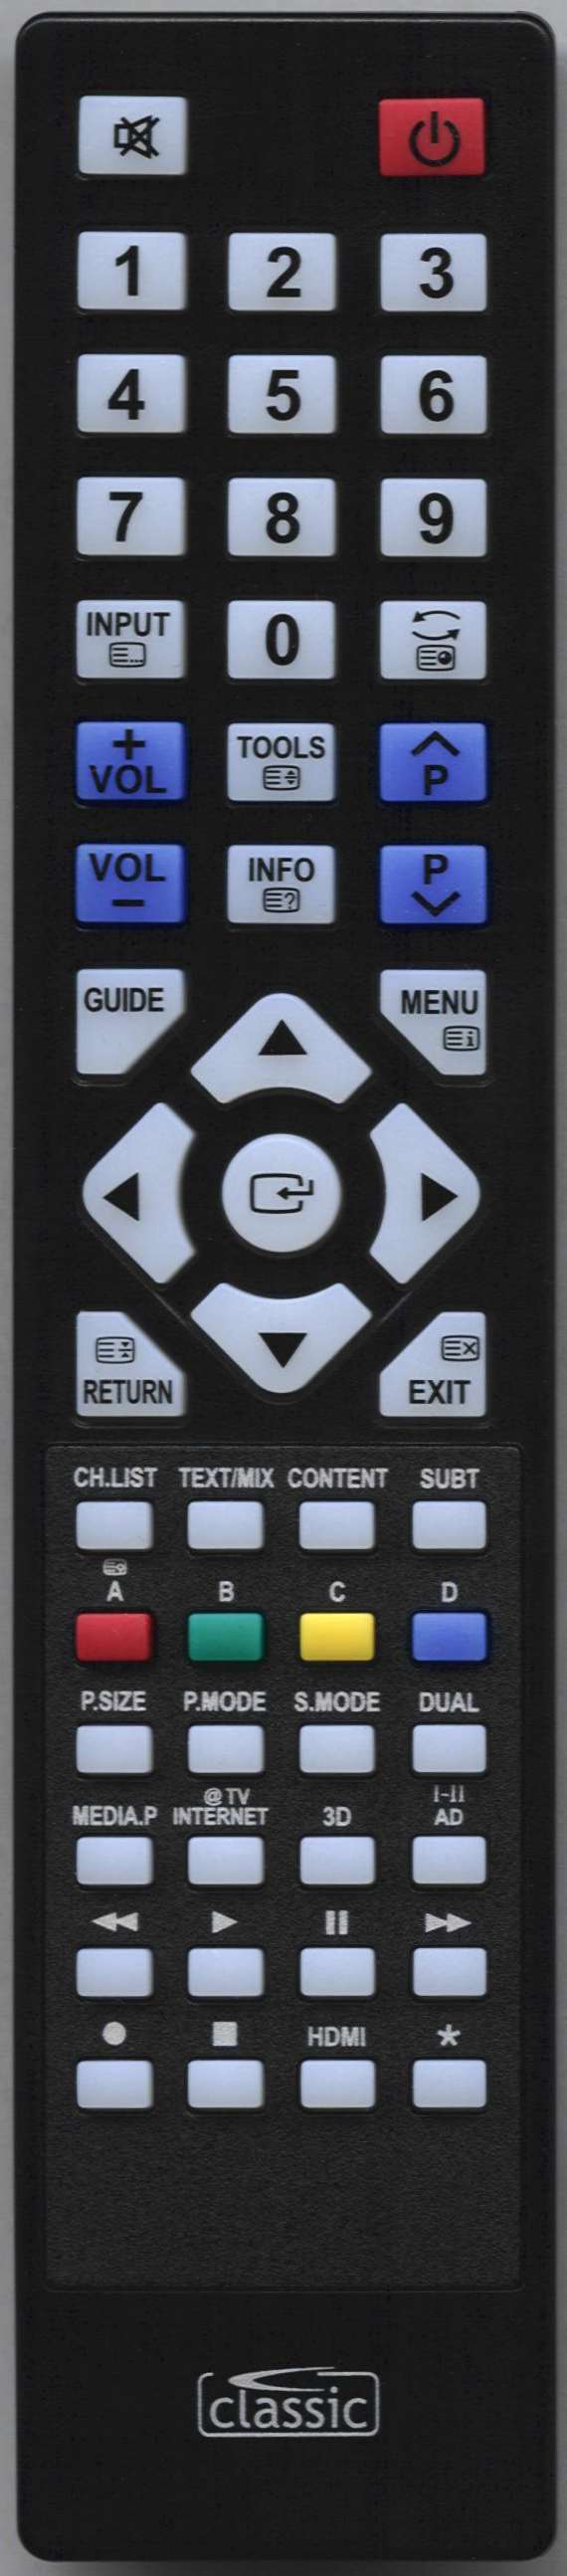 SAMSUNG PS50C535C1WXXE Remote Control